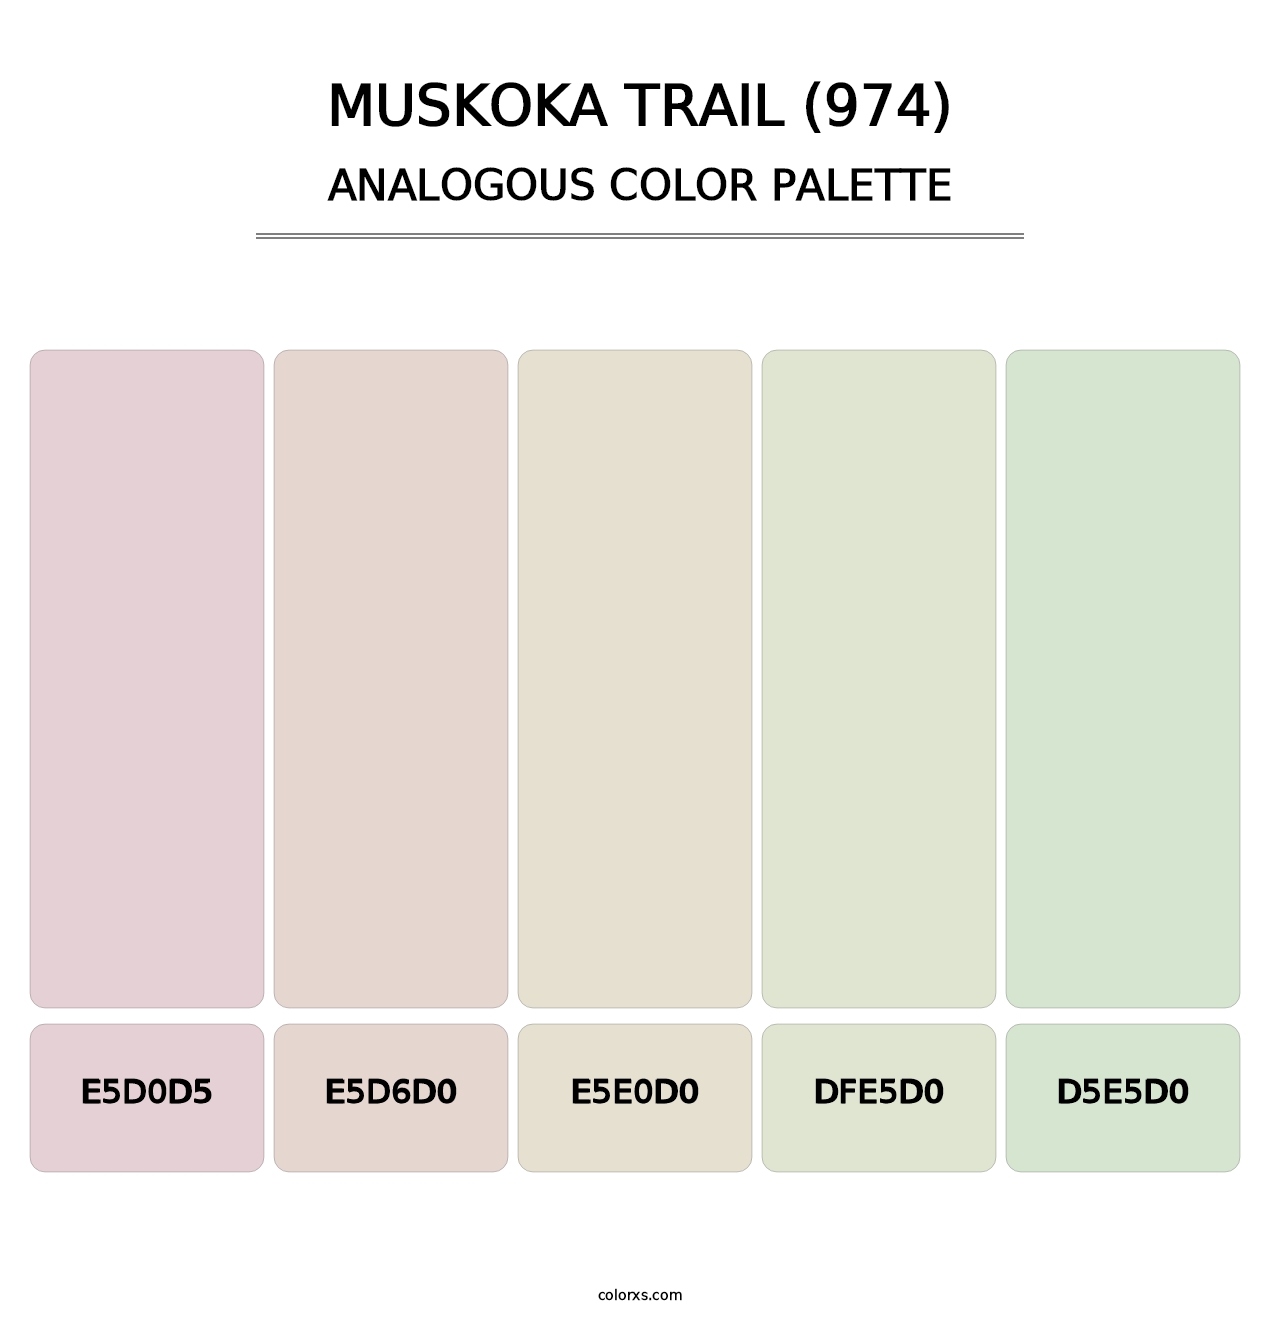 Muskoka Trail (974) - Analogous Color Palette